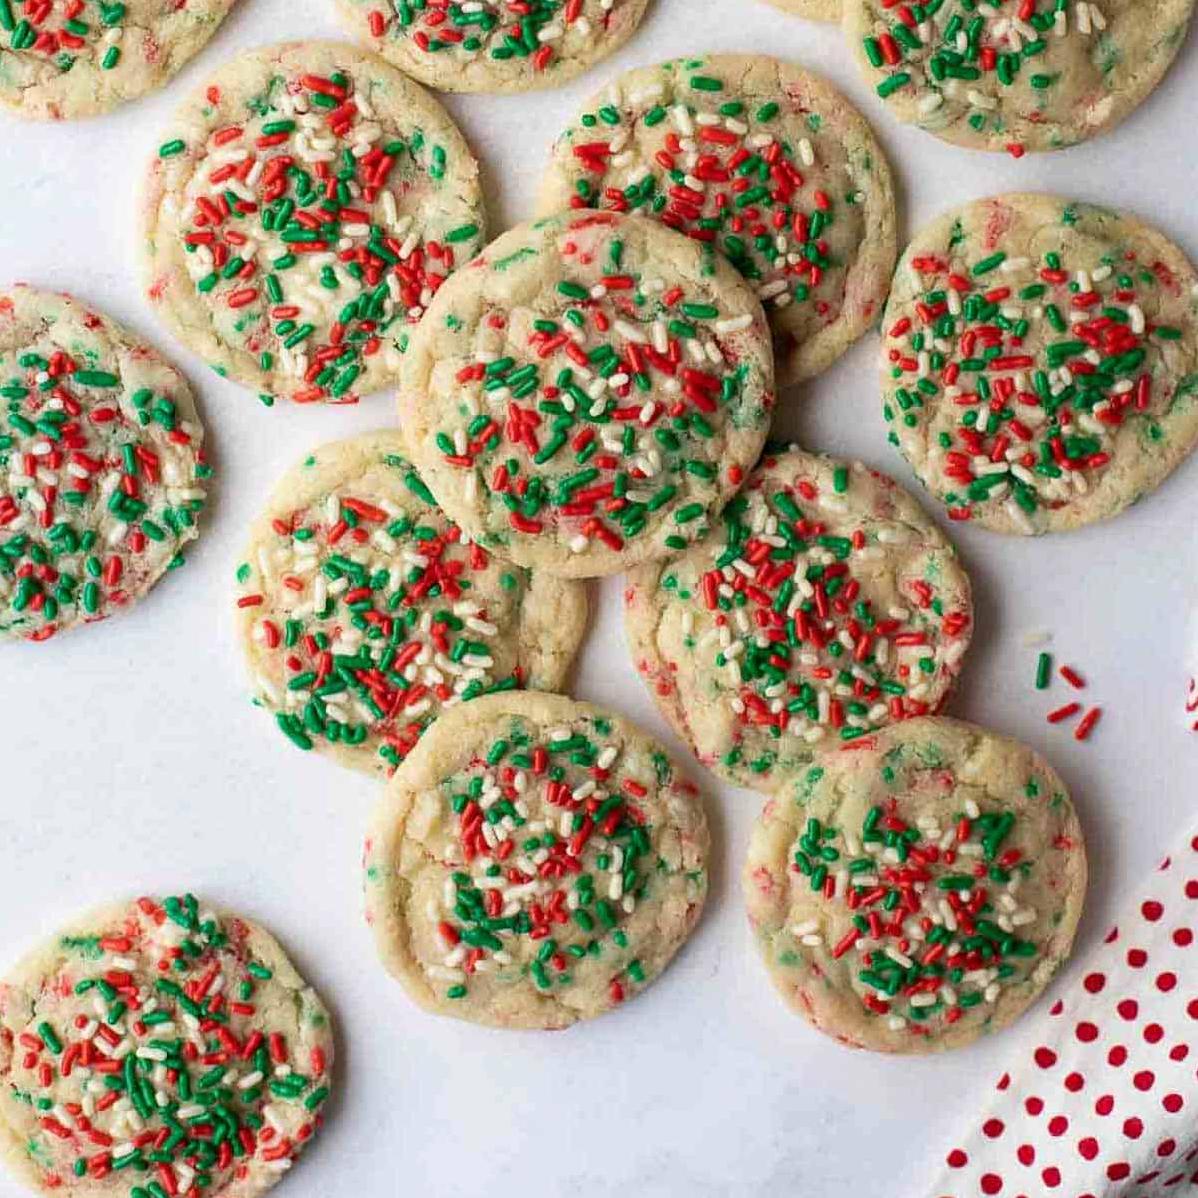 Gluten Free Christmas Cookies